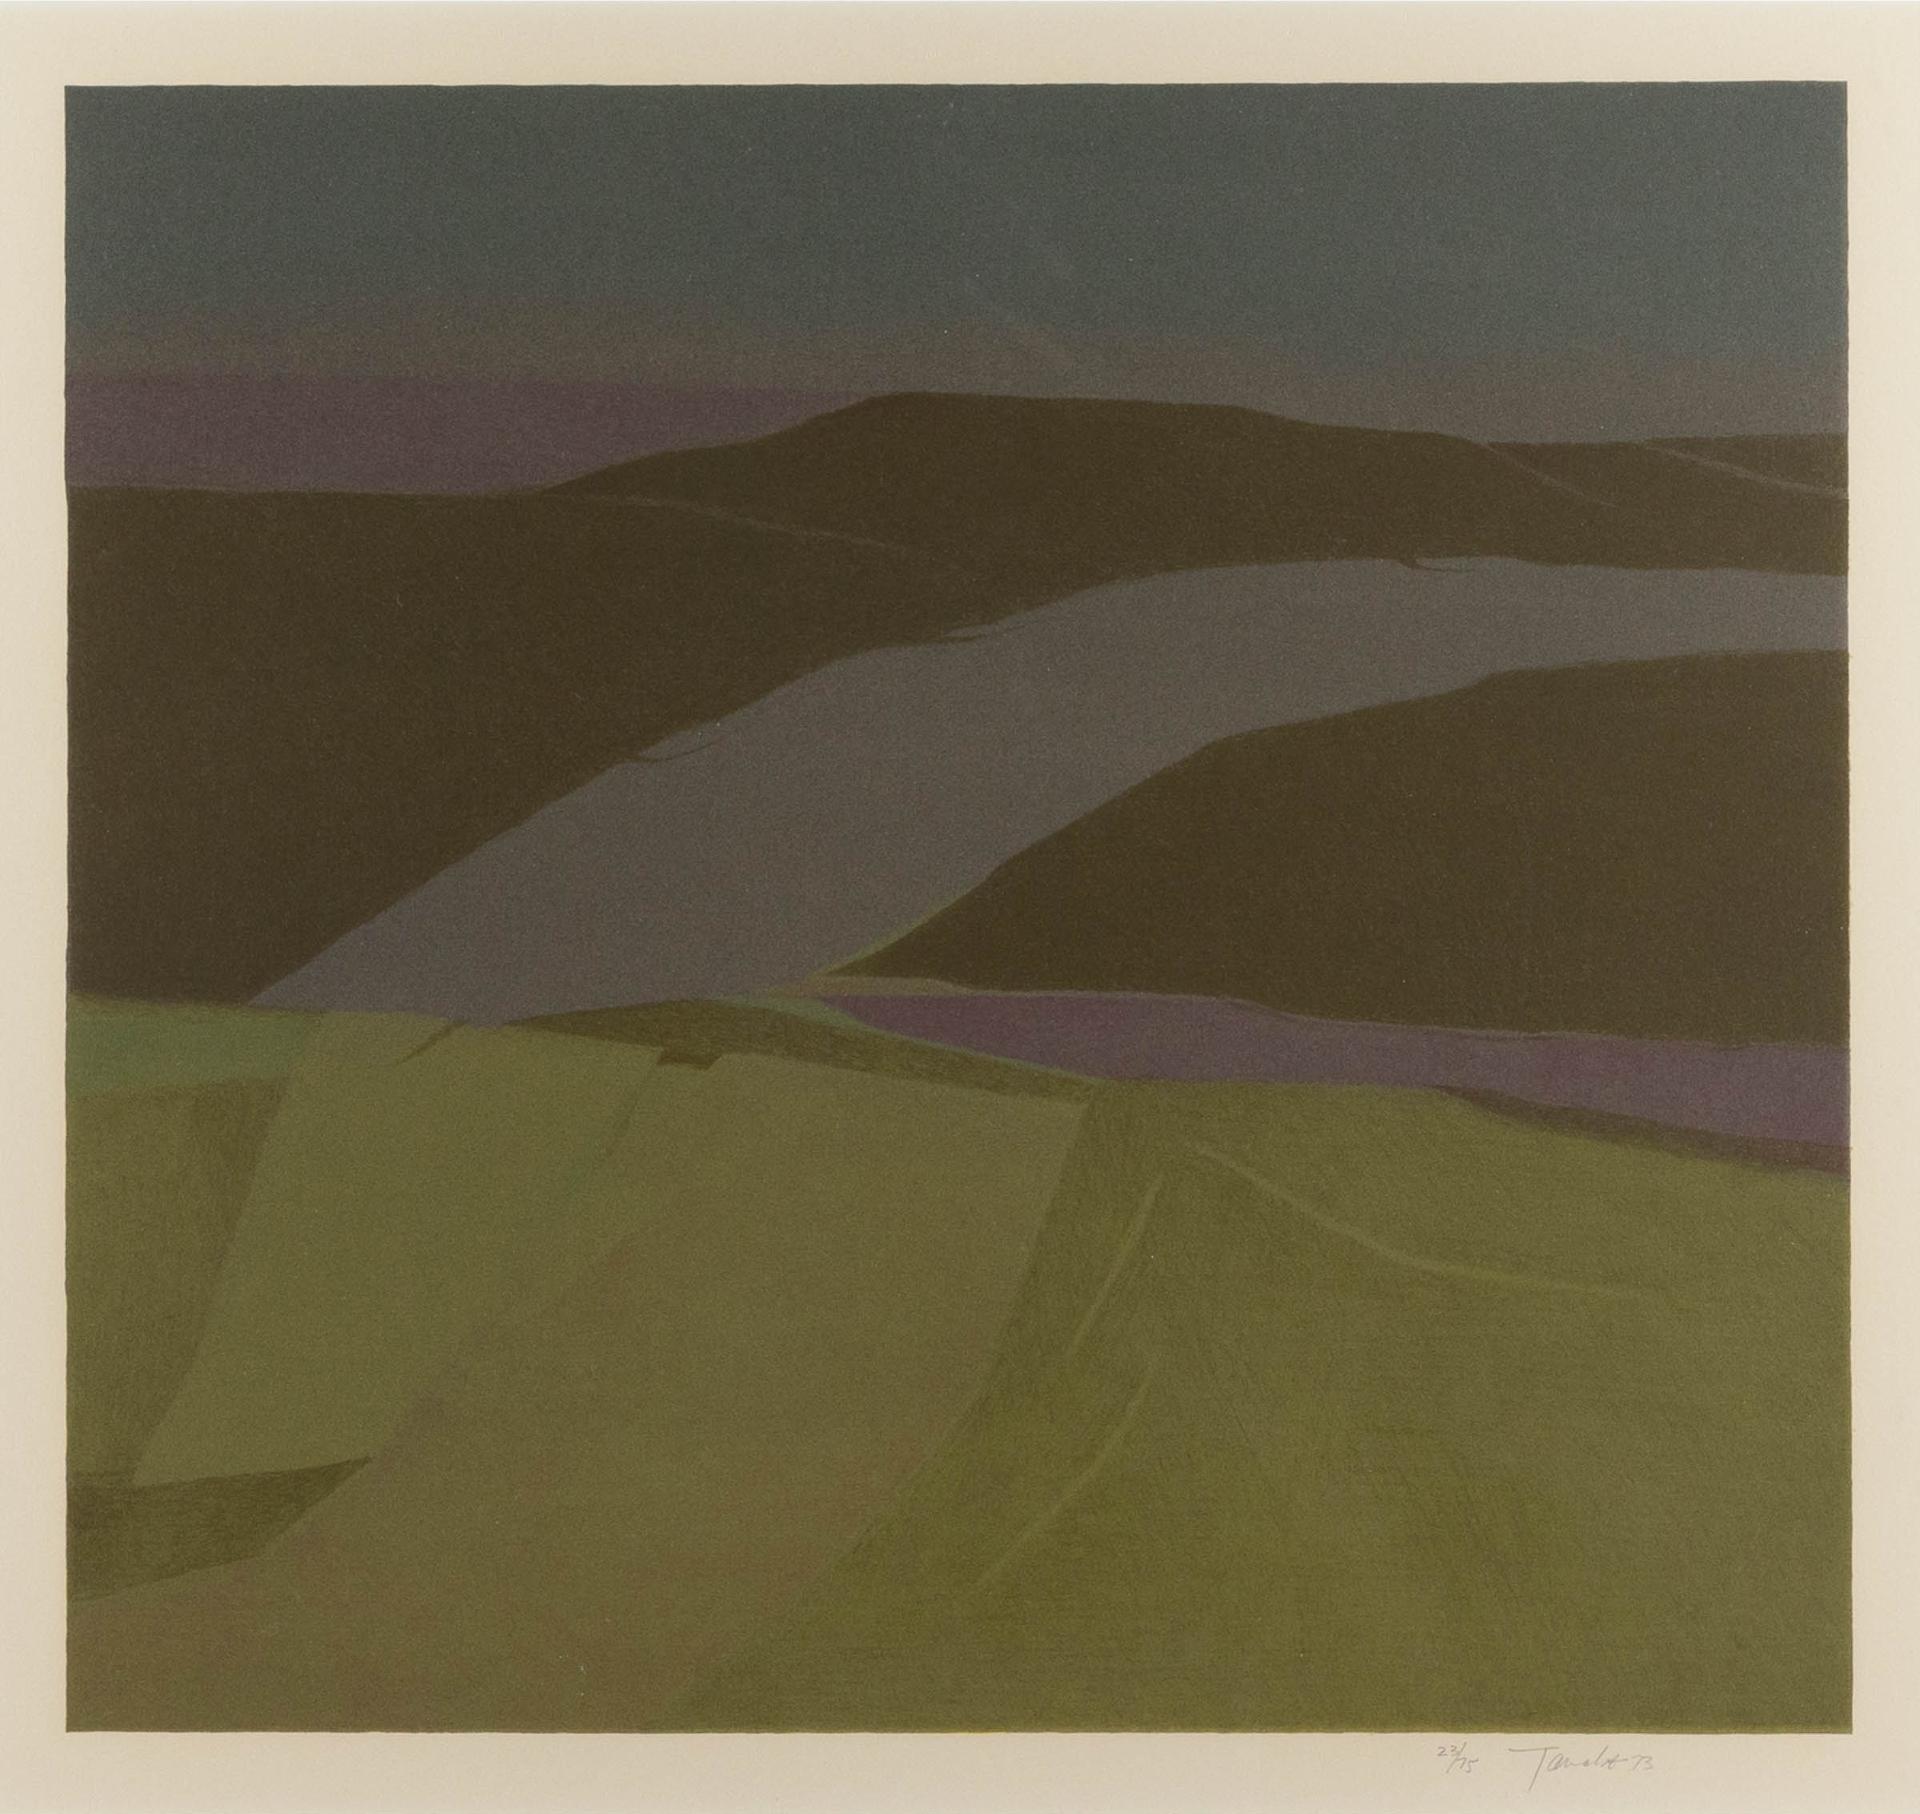 Takao Tanabe (1926) - The Land Interiors, 1973